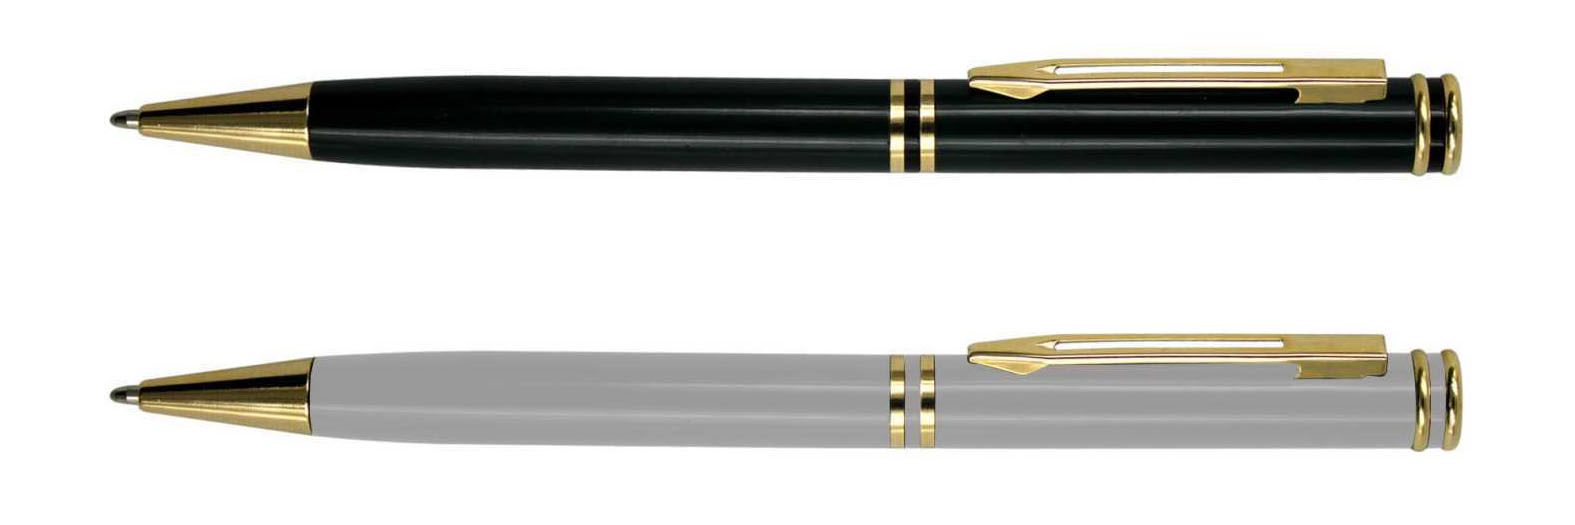 golden part Corporate souvenir metal ballpoint pen